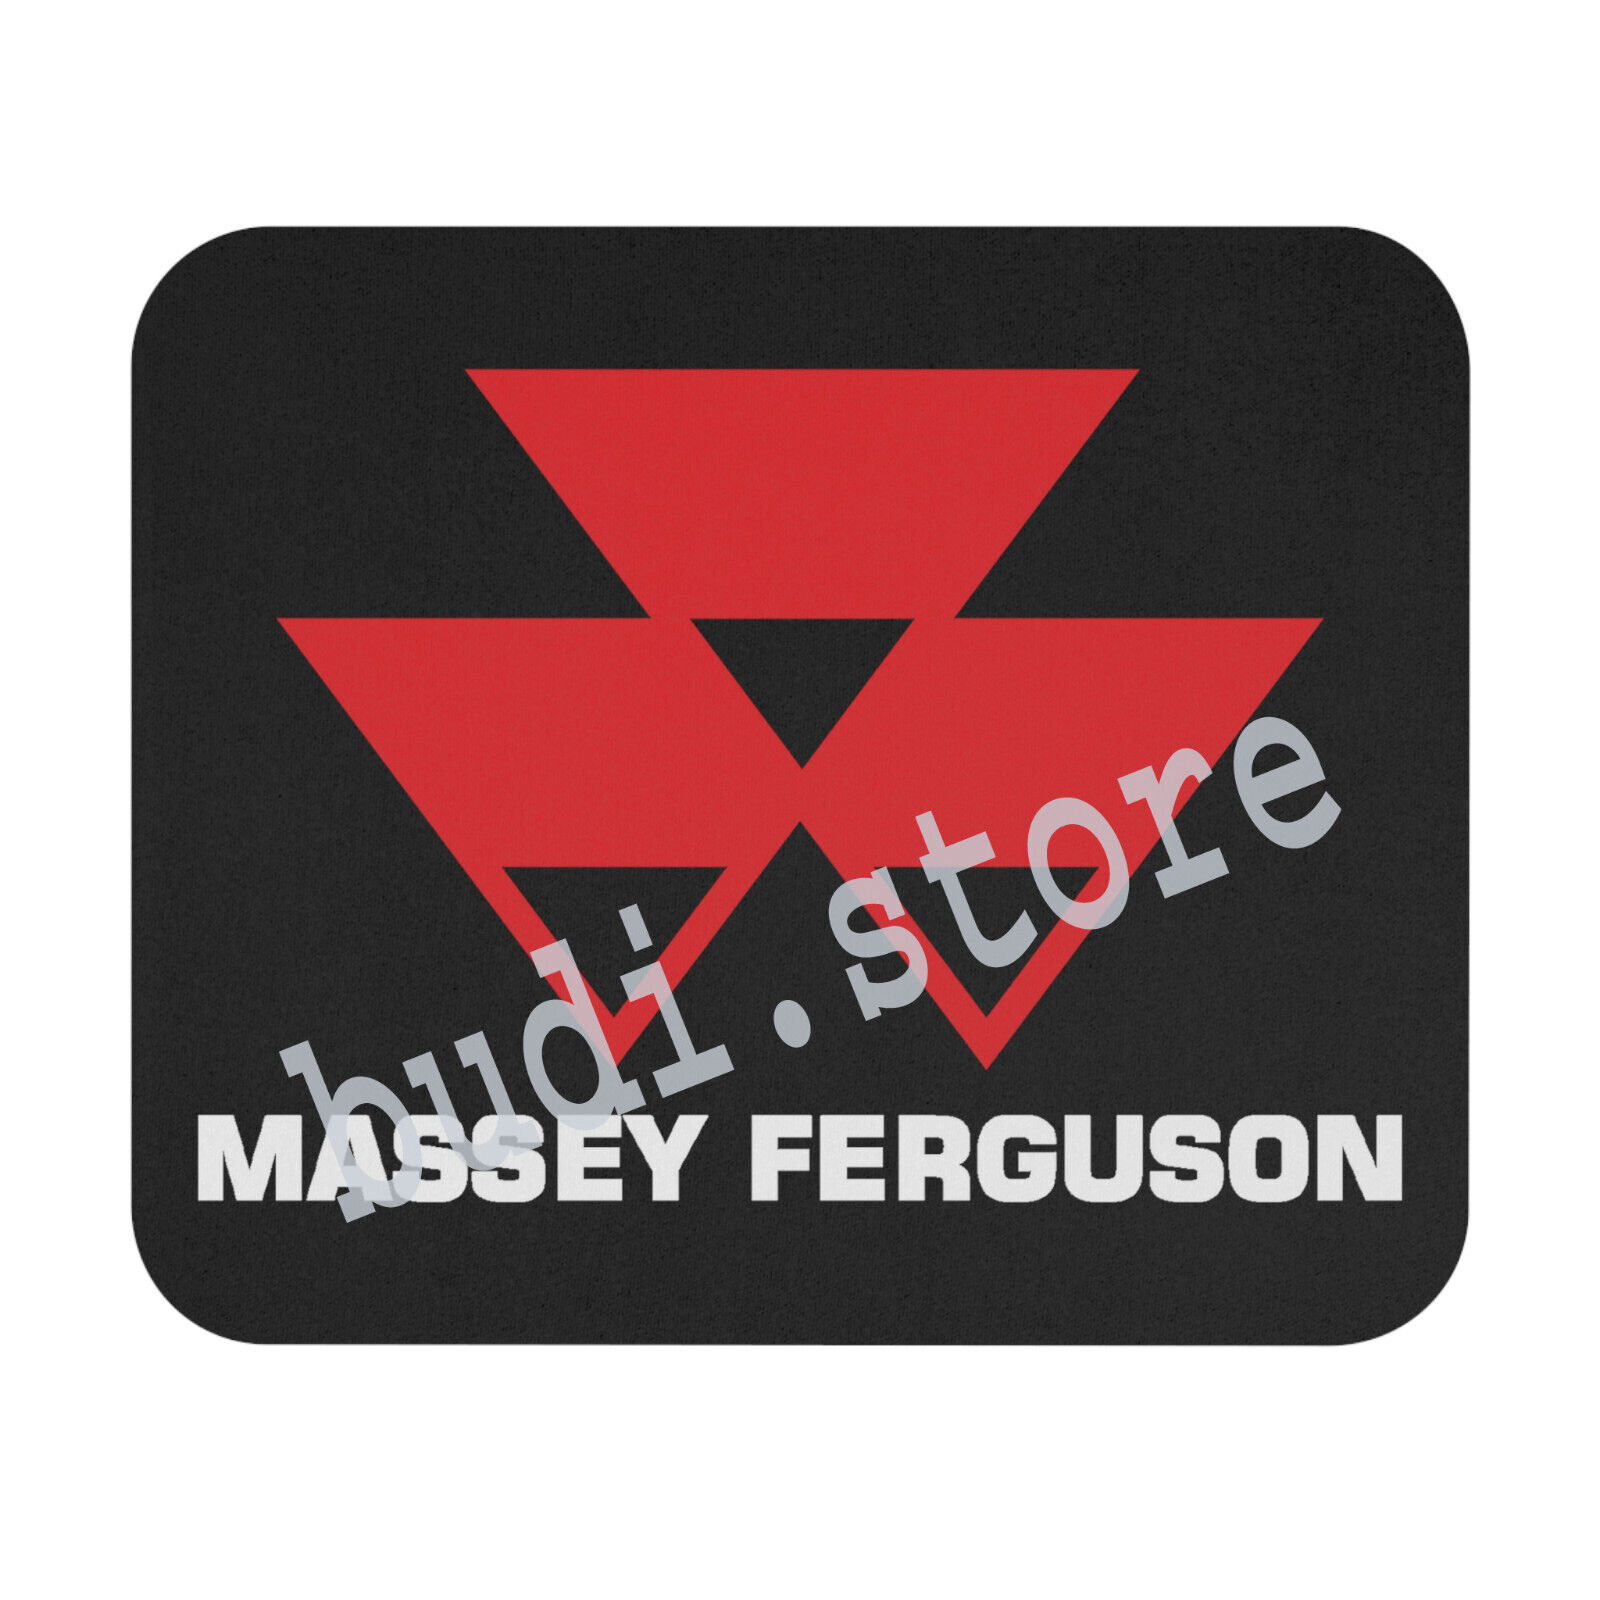 Massey Ferguson Tractor Logo Black Mousepad Desk Mat Gaming Mouse Pad